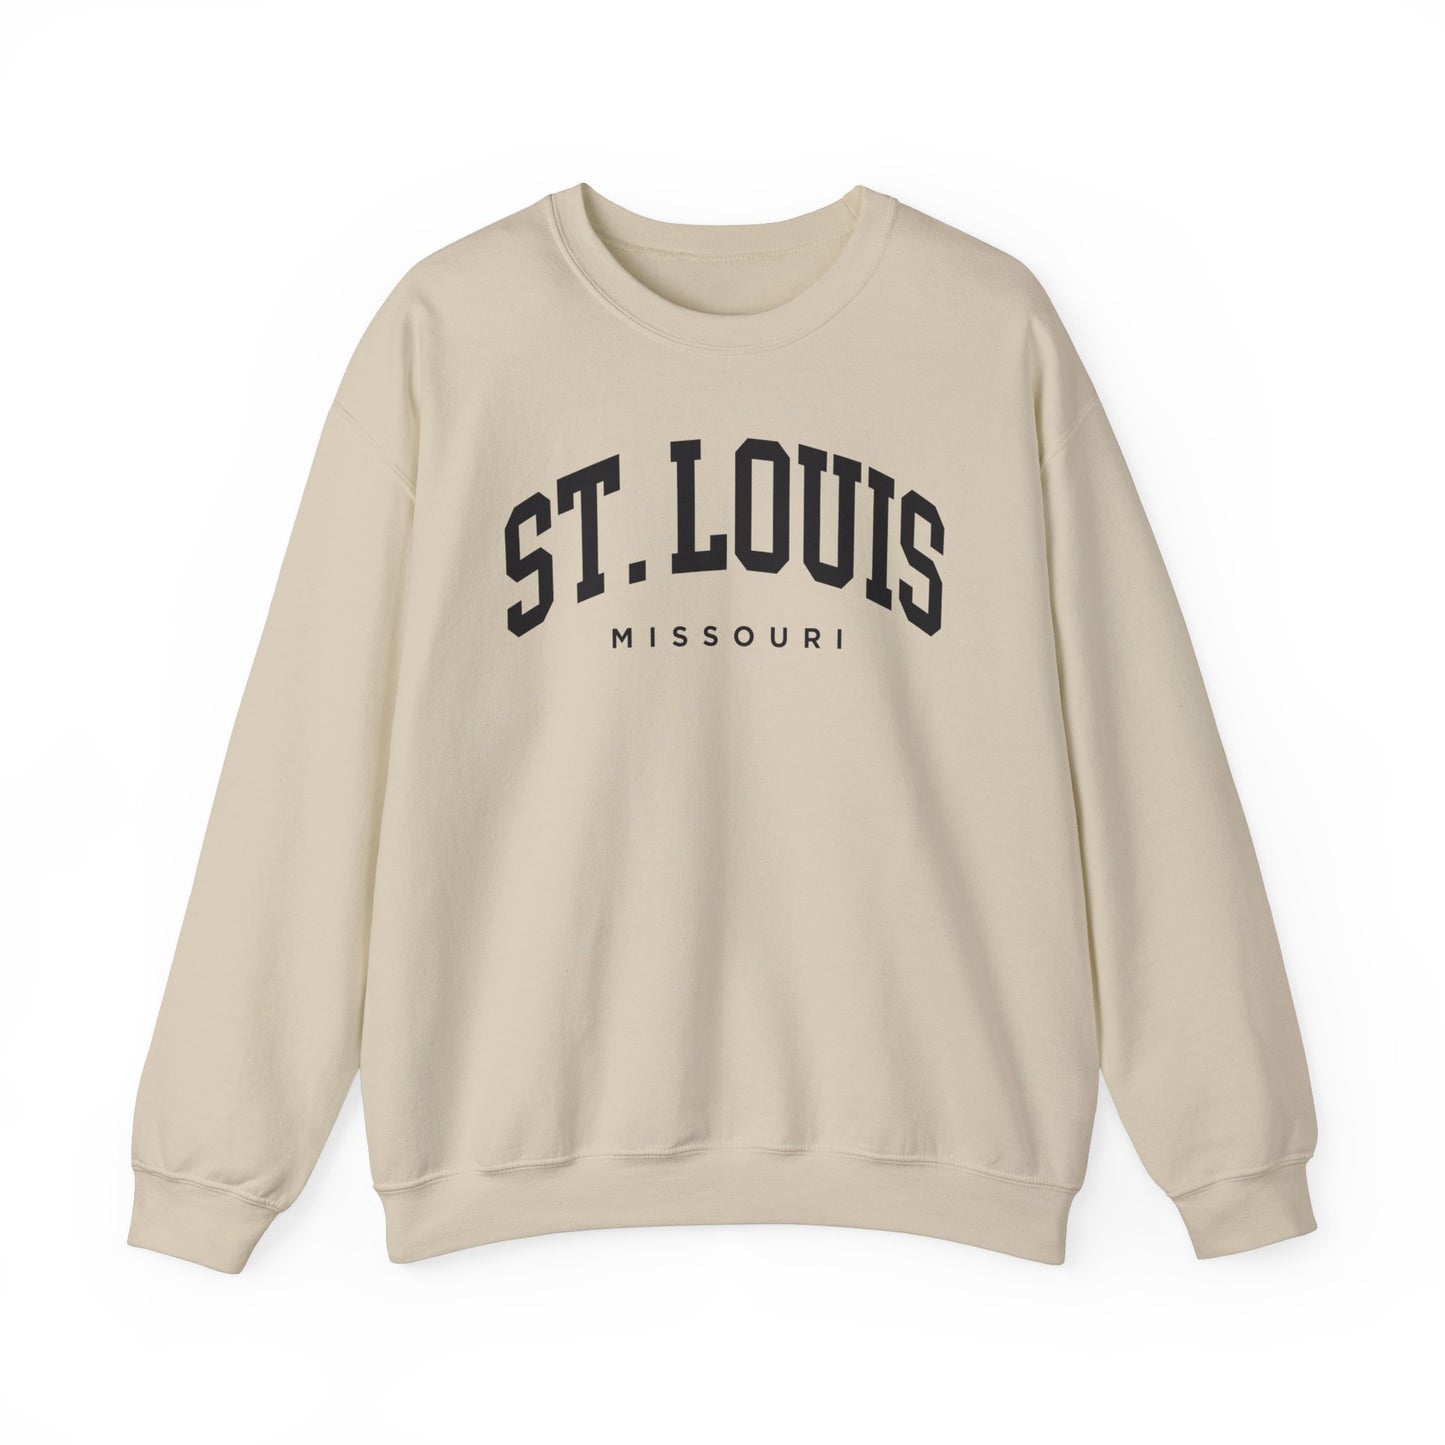 St. Louis Missouri Sweatshirt